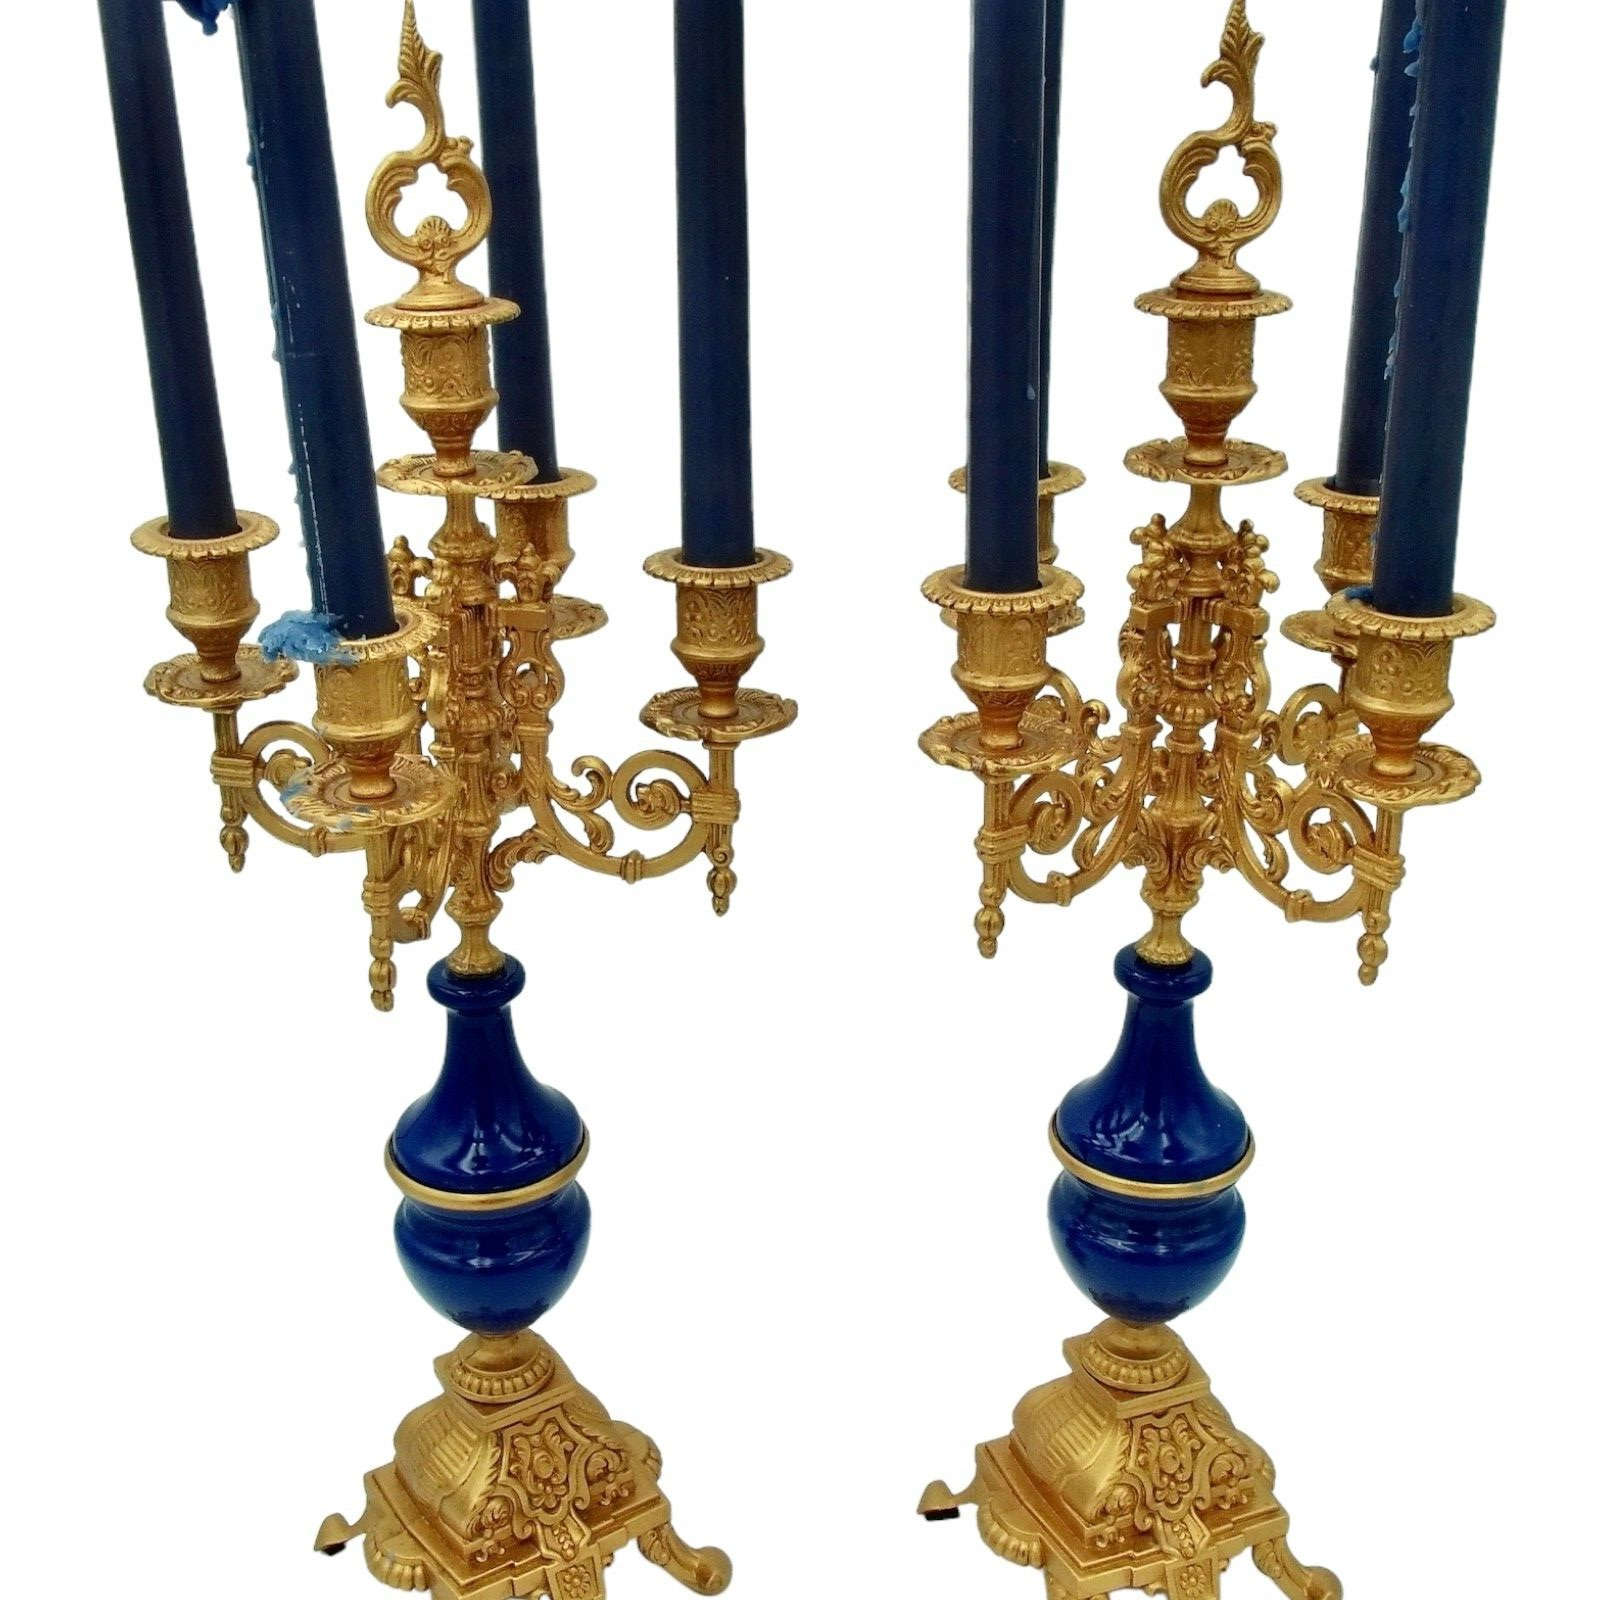 Stunning Pair of Louis XIV Style Gilt & Royal Blue Candlesticks